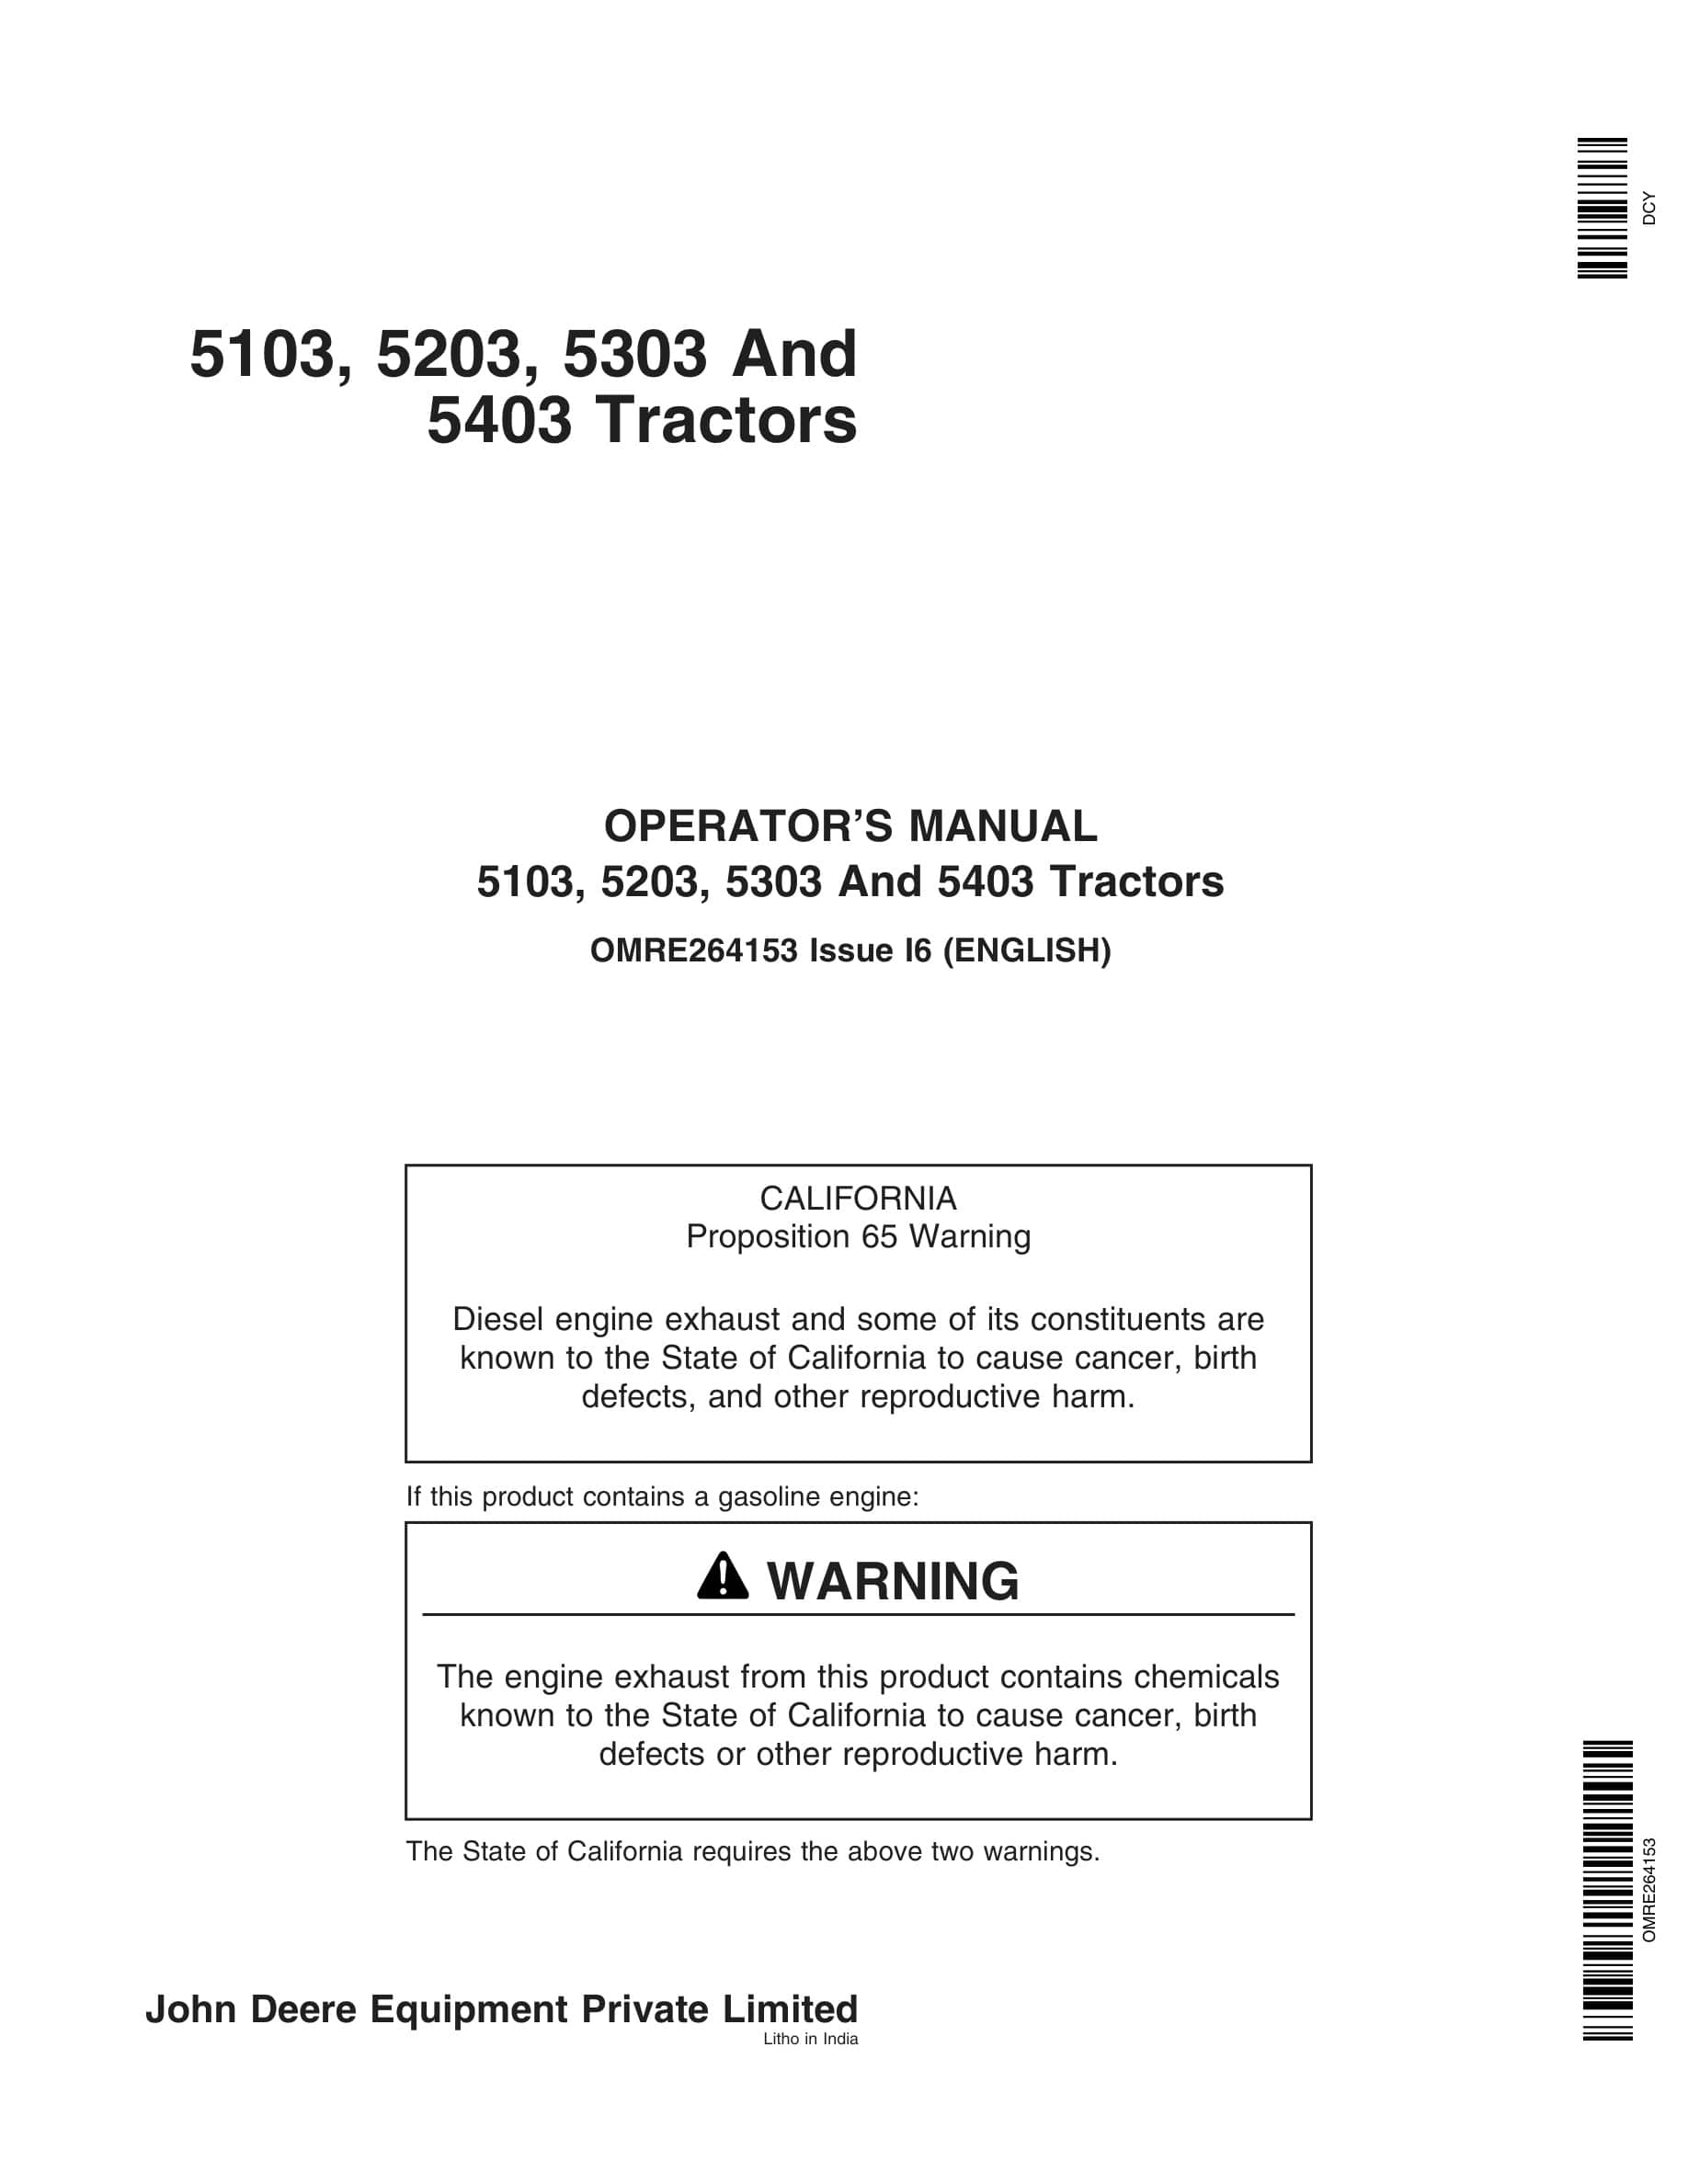 John Deere 5103, 5203, 5303 And 5403 Tractors Operator Manuals OMRE264153-1